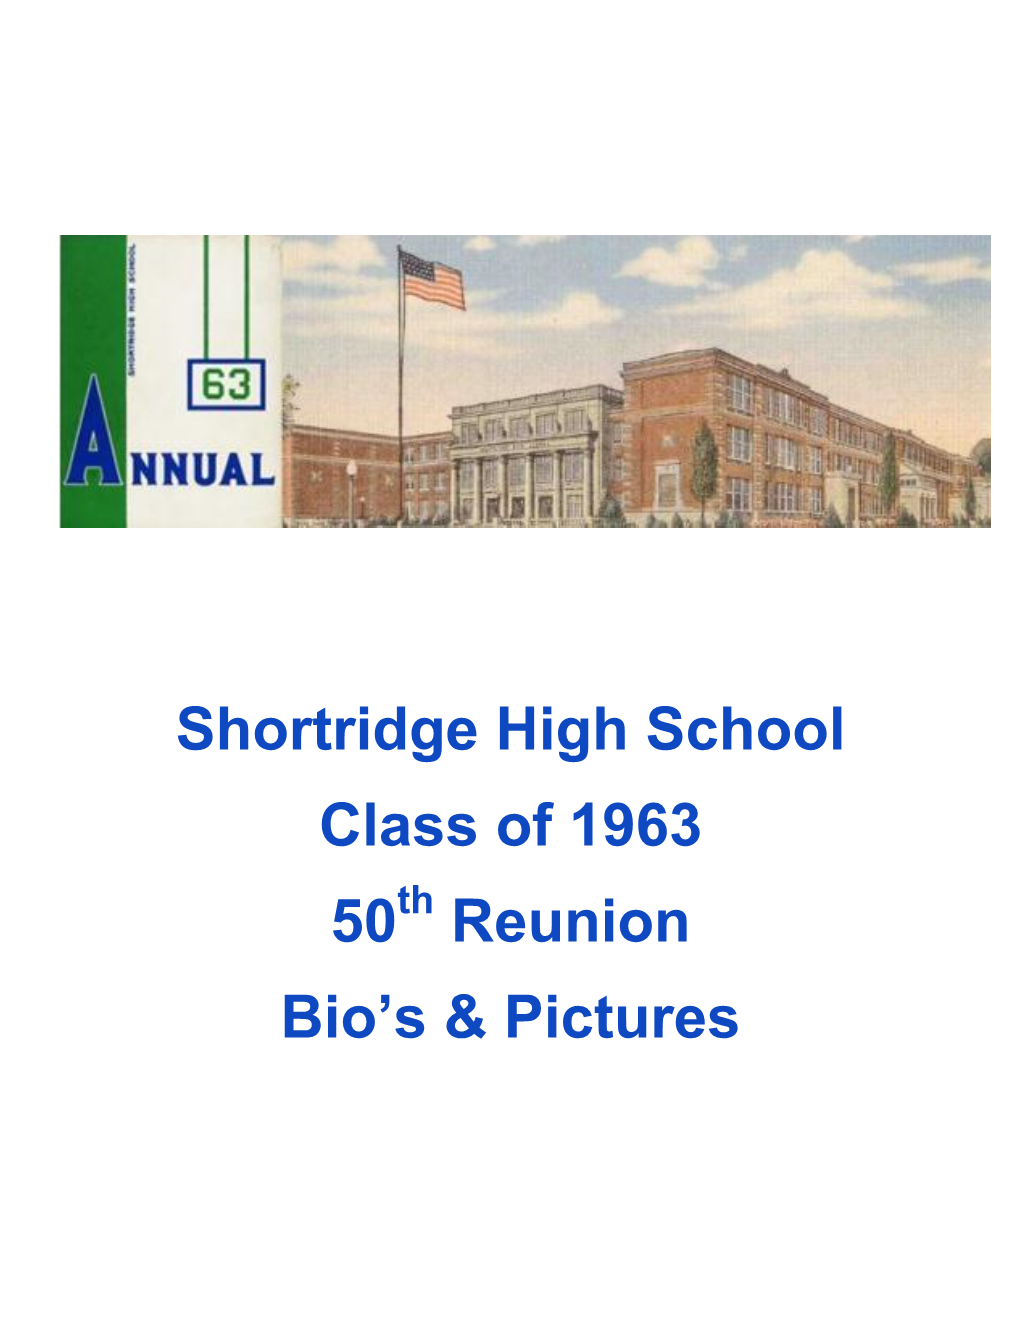 Shortridge High School Class of 1963 50 Reunion Bio's & Pictures